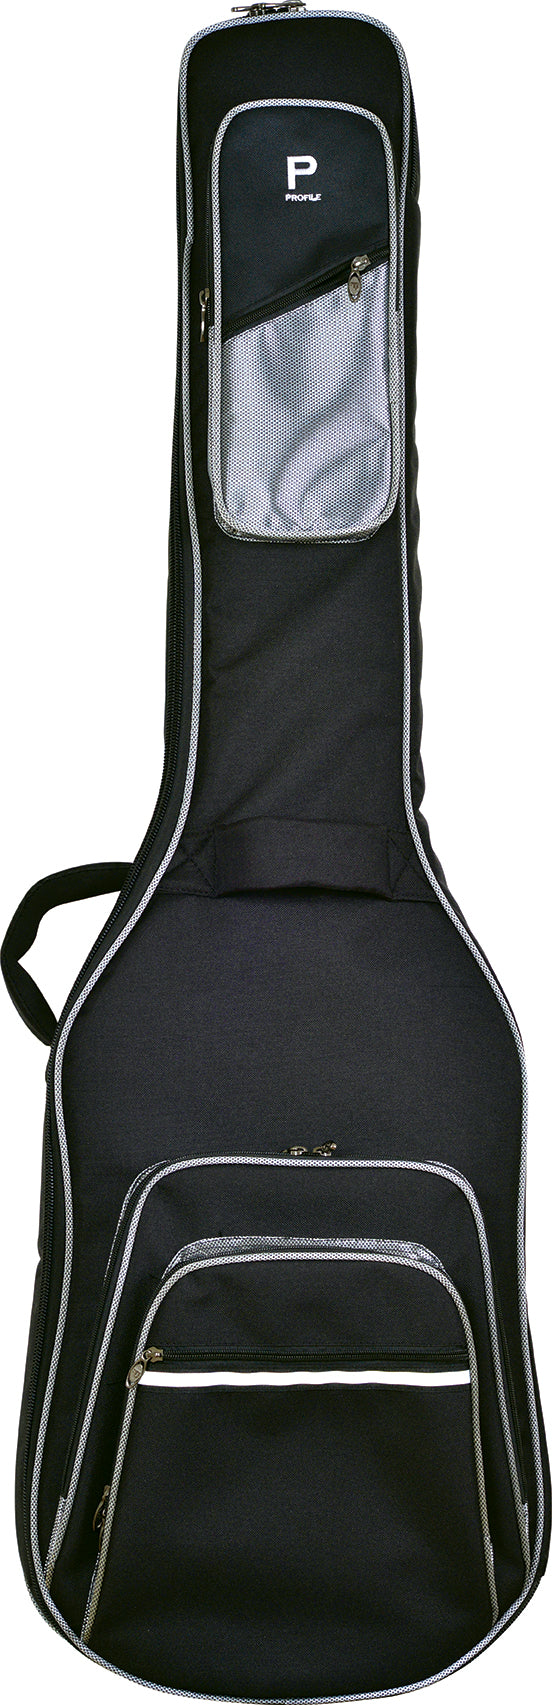 Profile PRCB250 Classical Guitar Gigbag